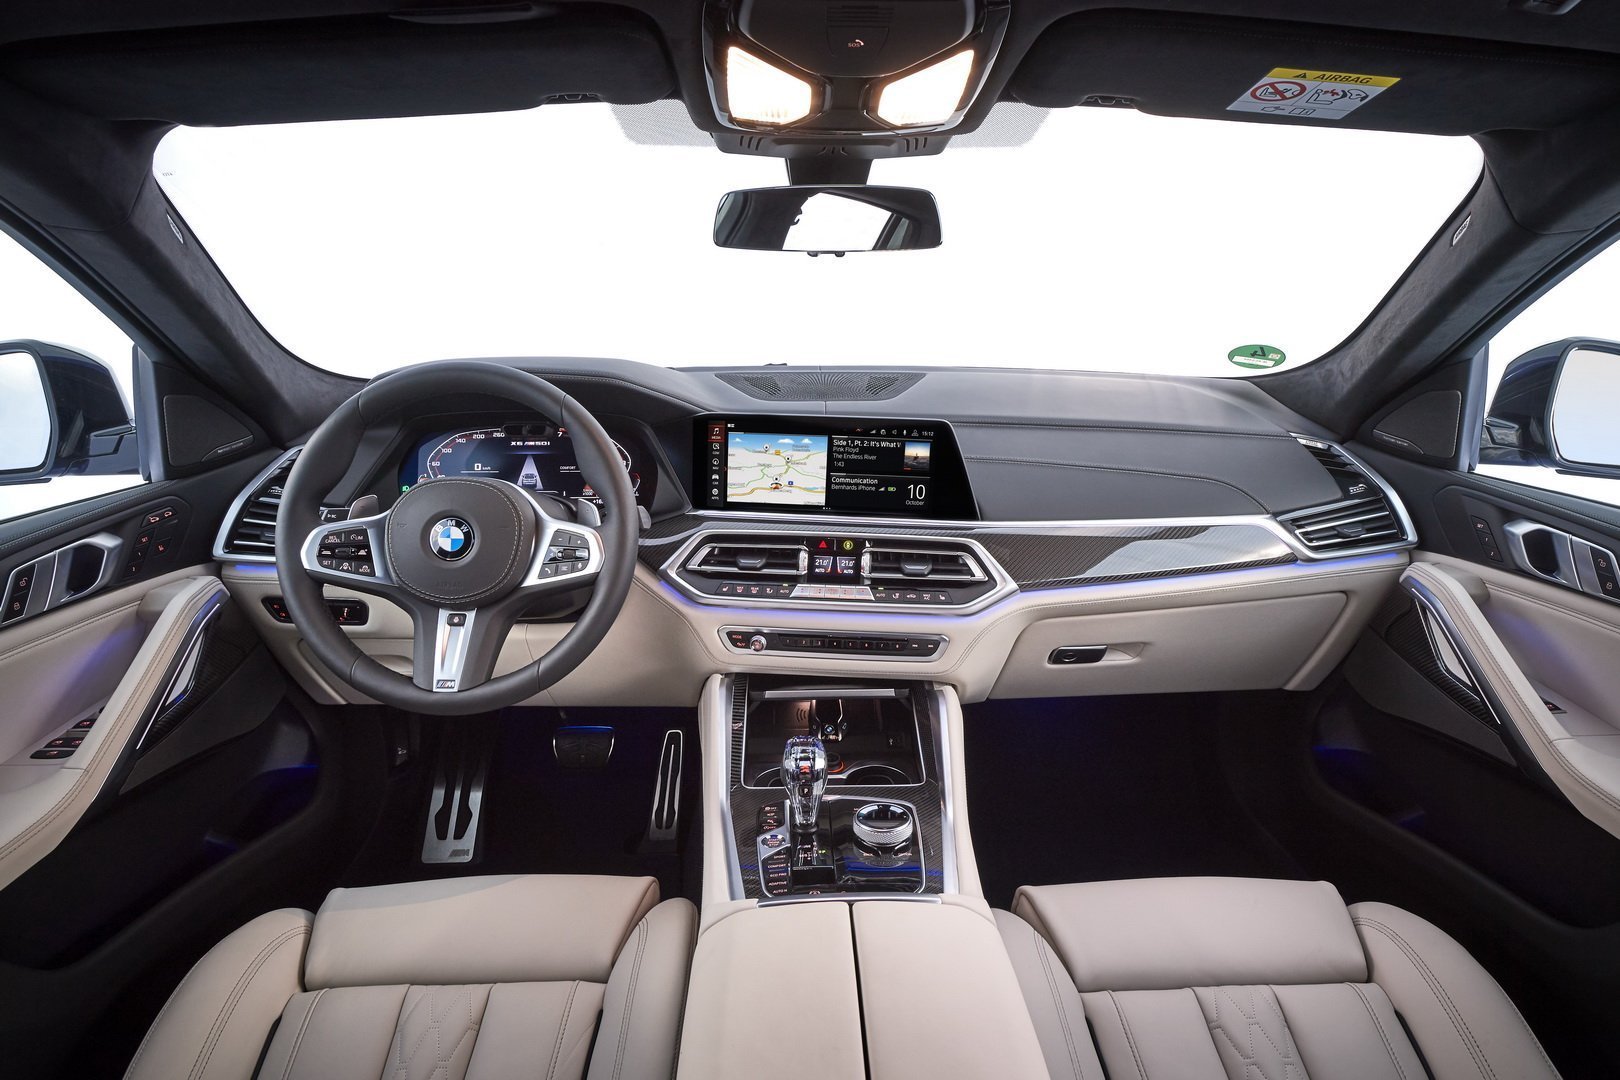 Immagine interni nuova BMW X6 2020